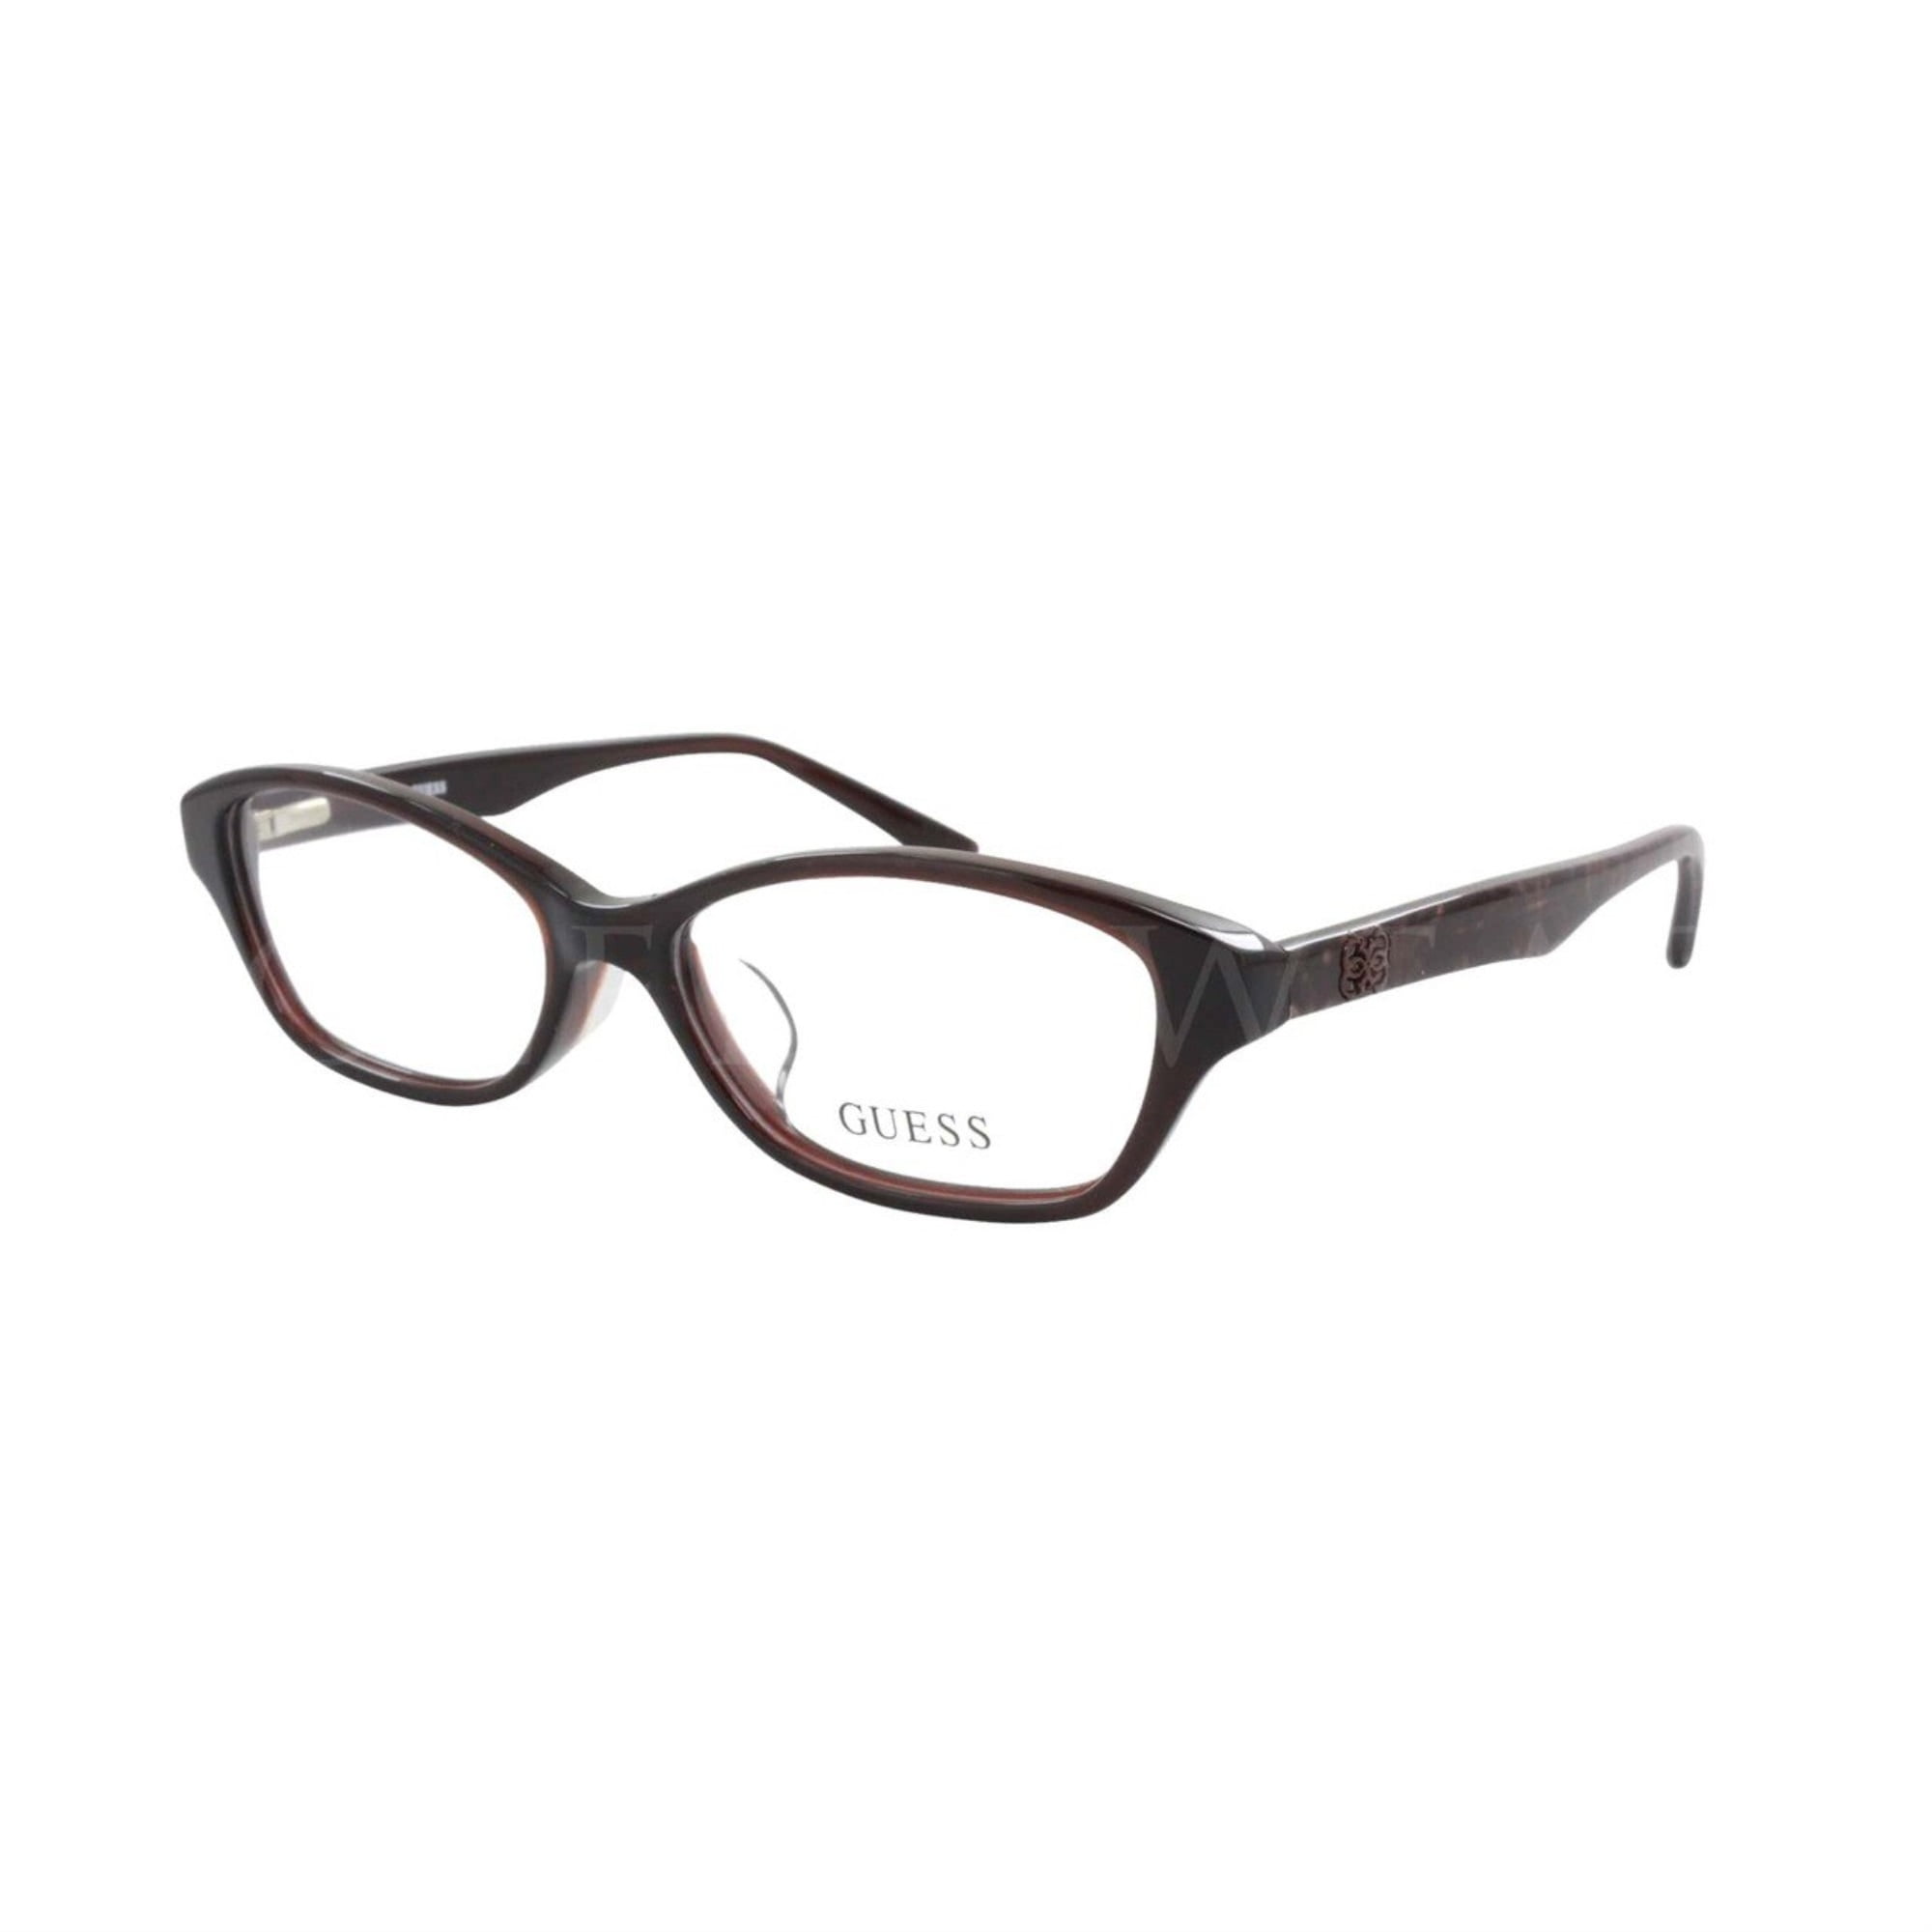 NEW Guess GU 2417 BRN 52mm Brown Optical Eyeglasses Frames 